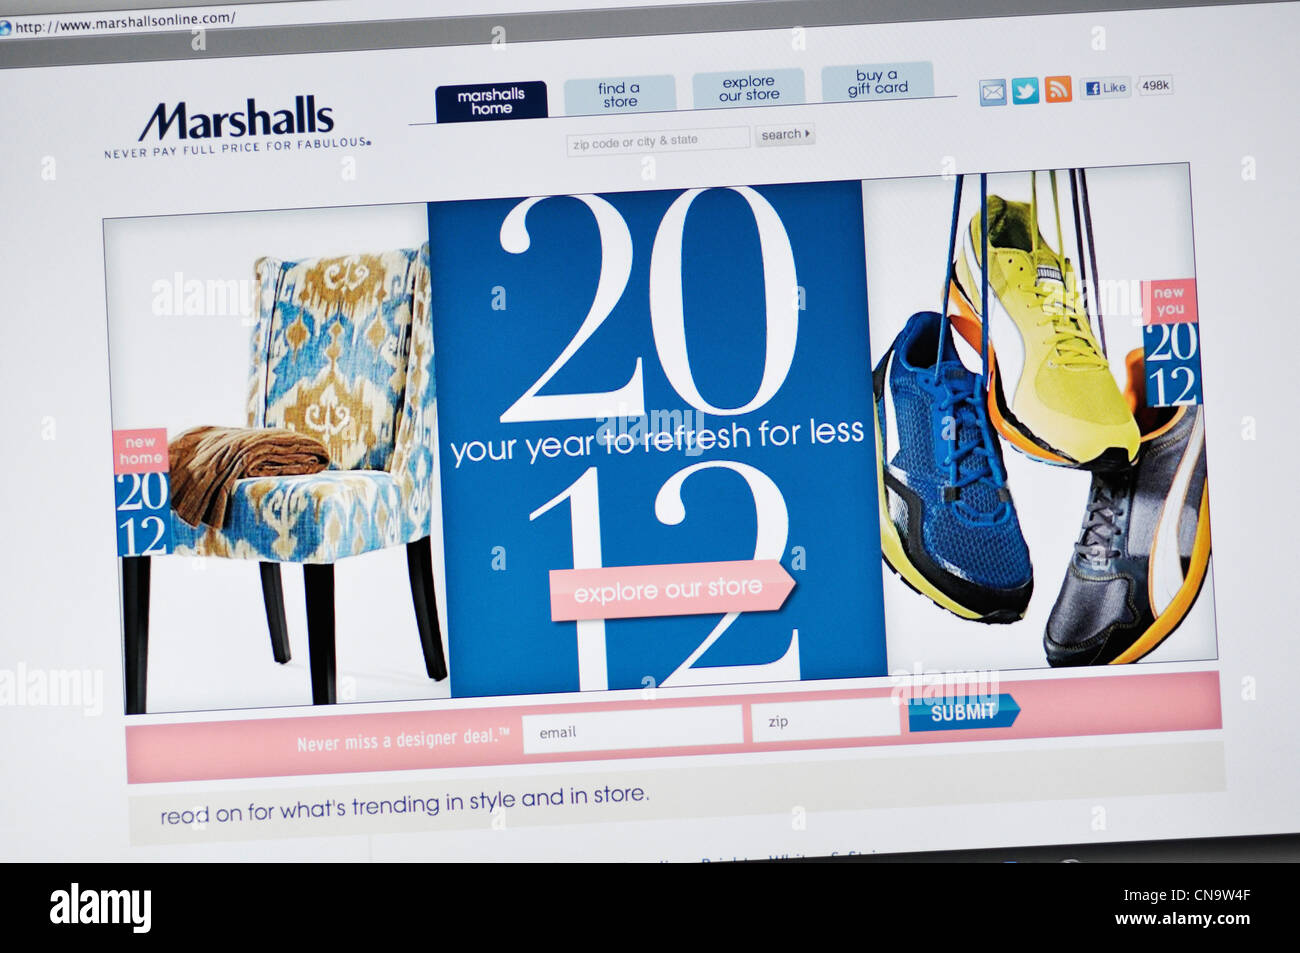 Marshalls Shopping website Stock Photo